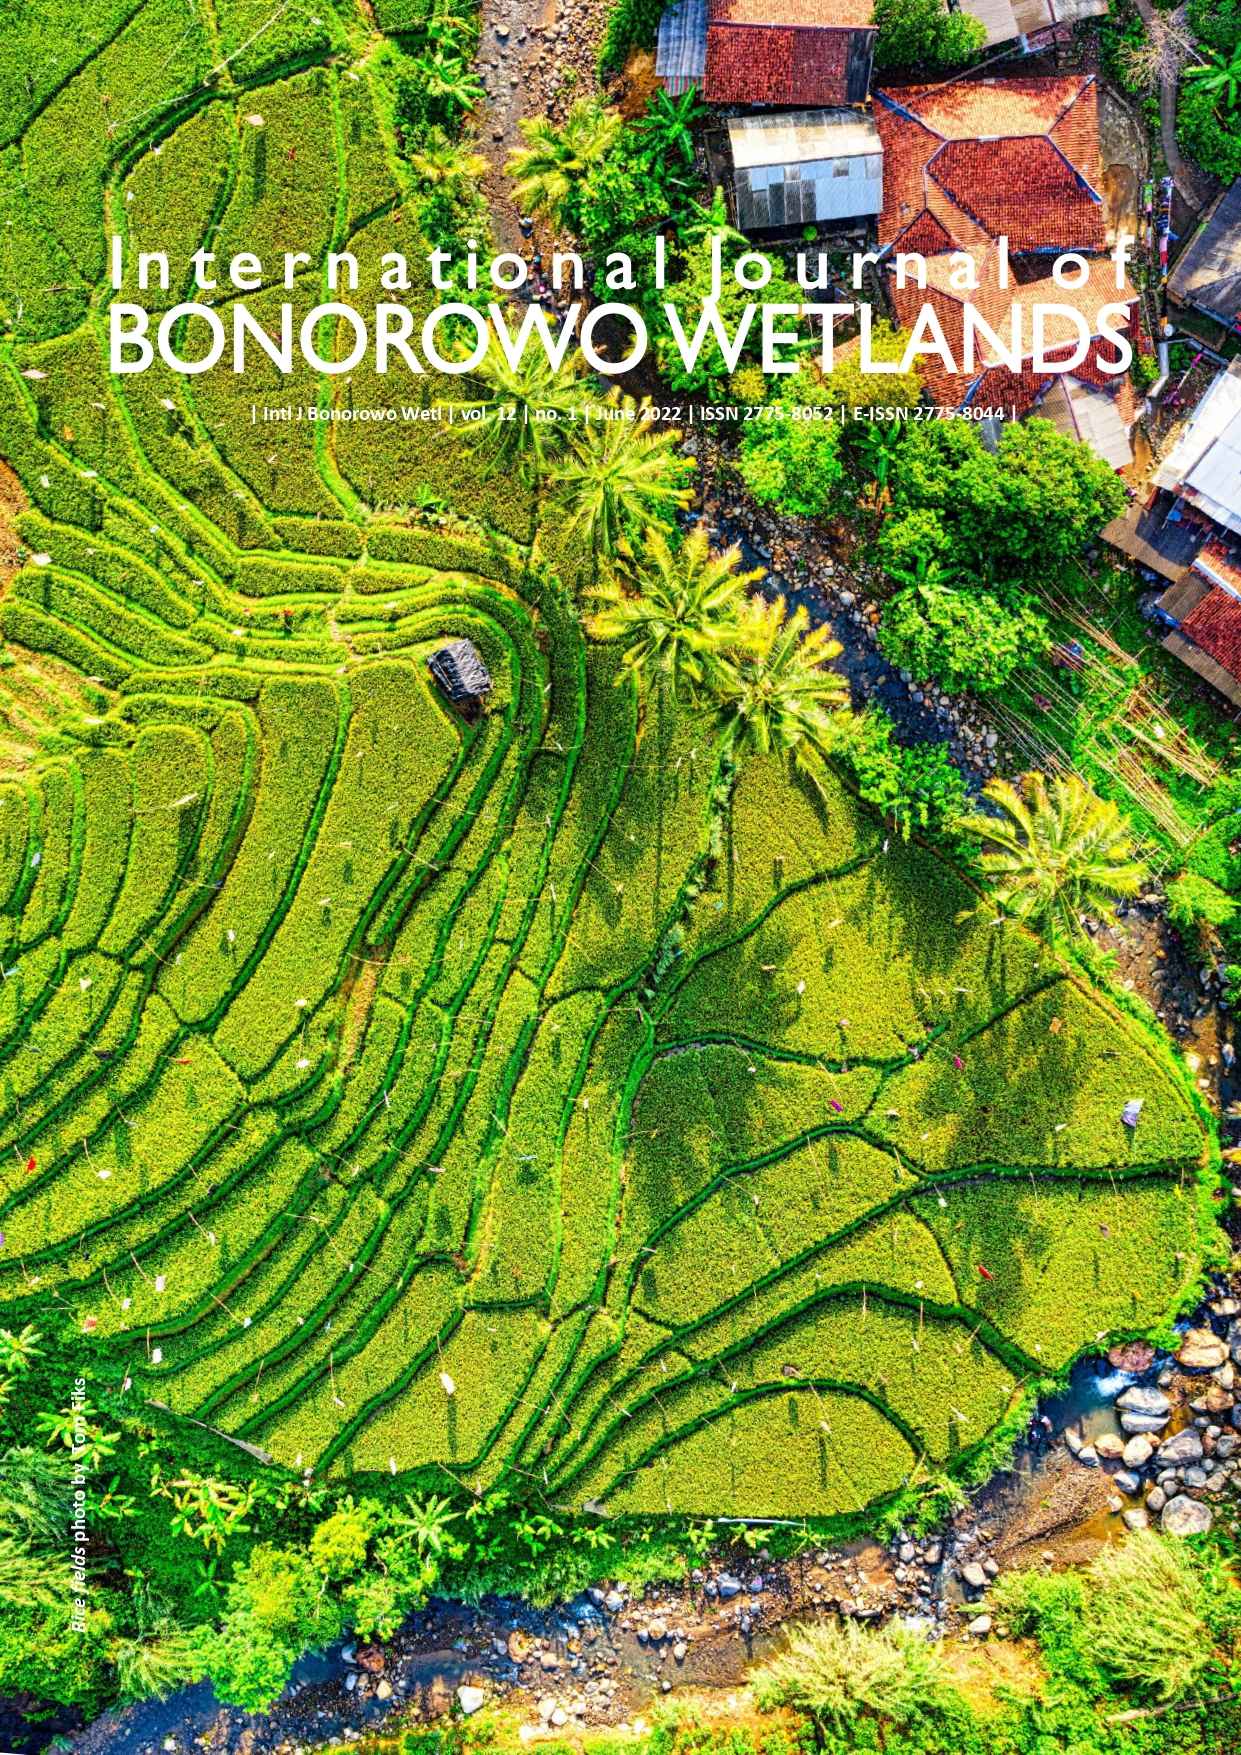 International Journal of Bonorowo Wetlands